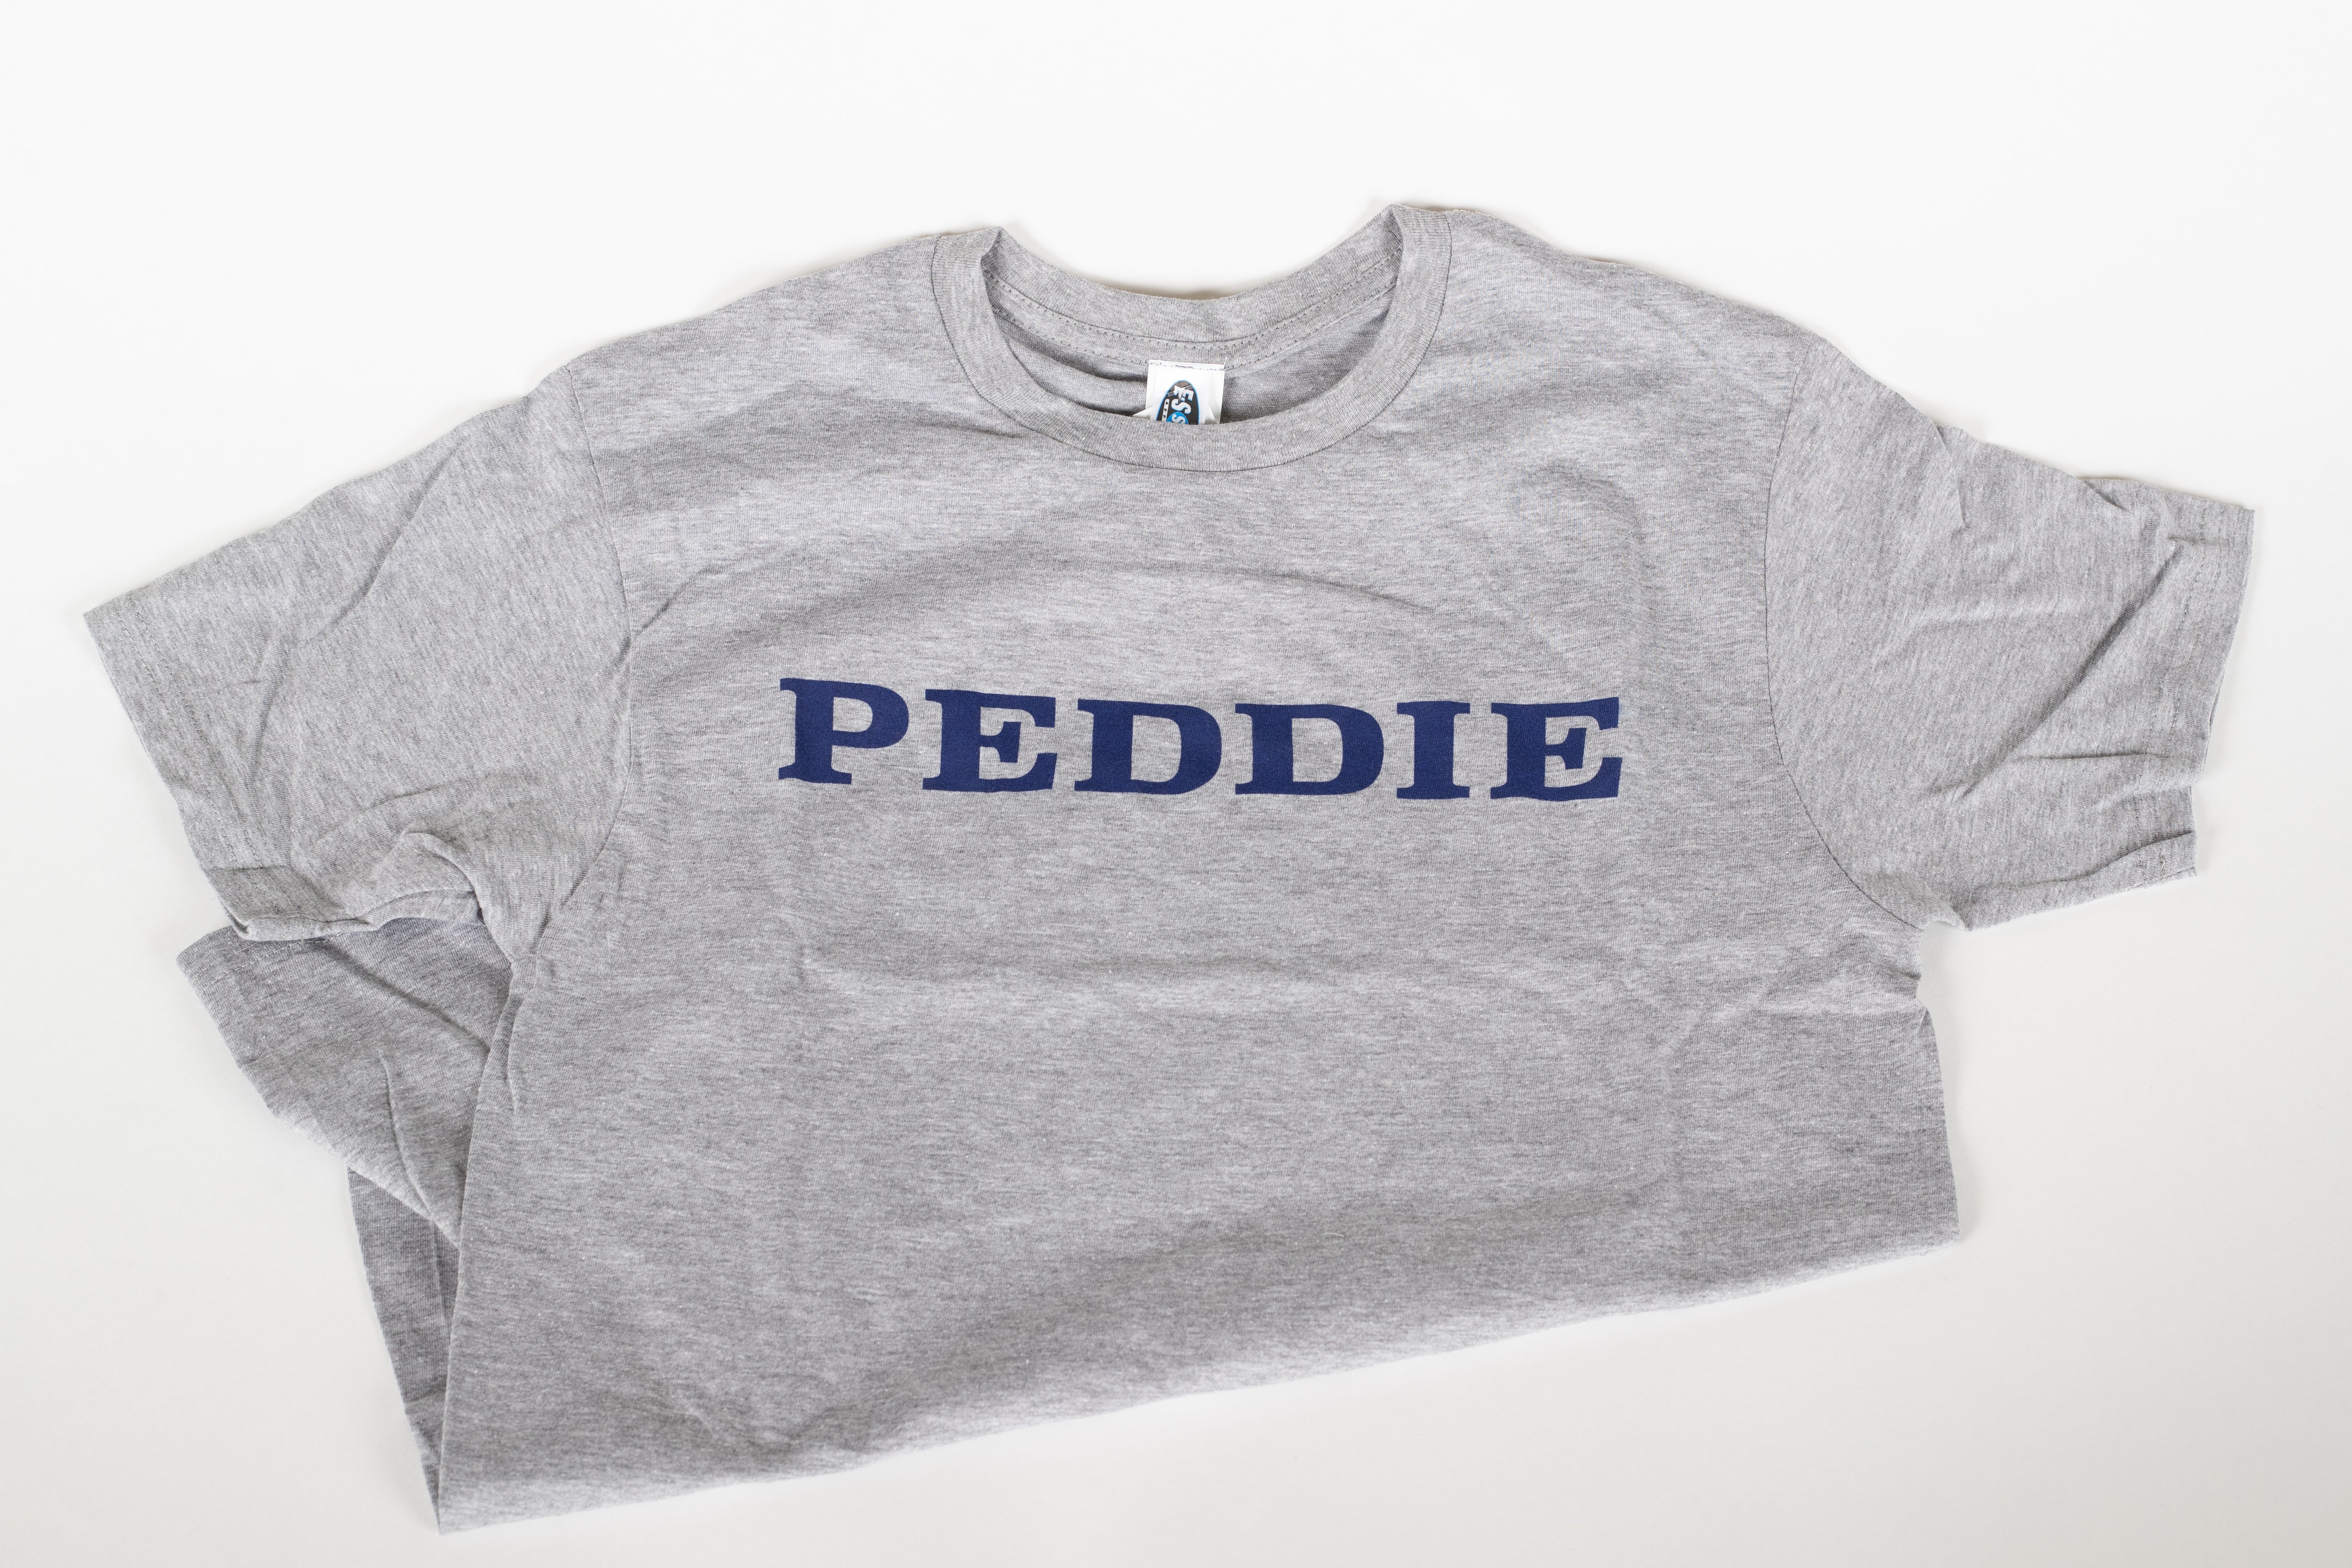 Peddie Tee Shirt